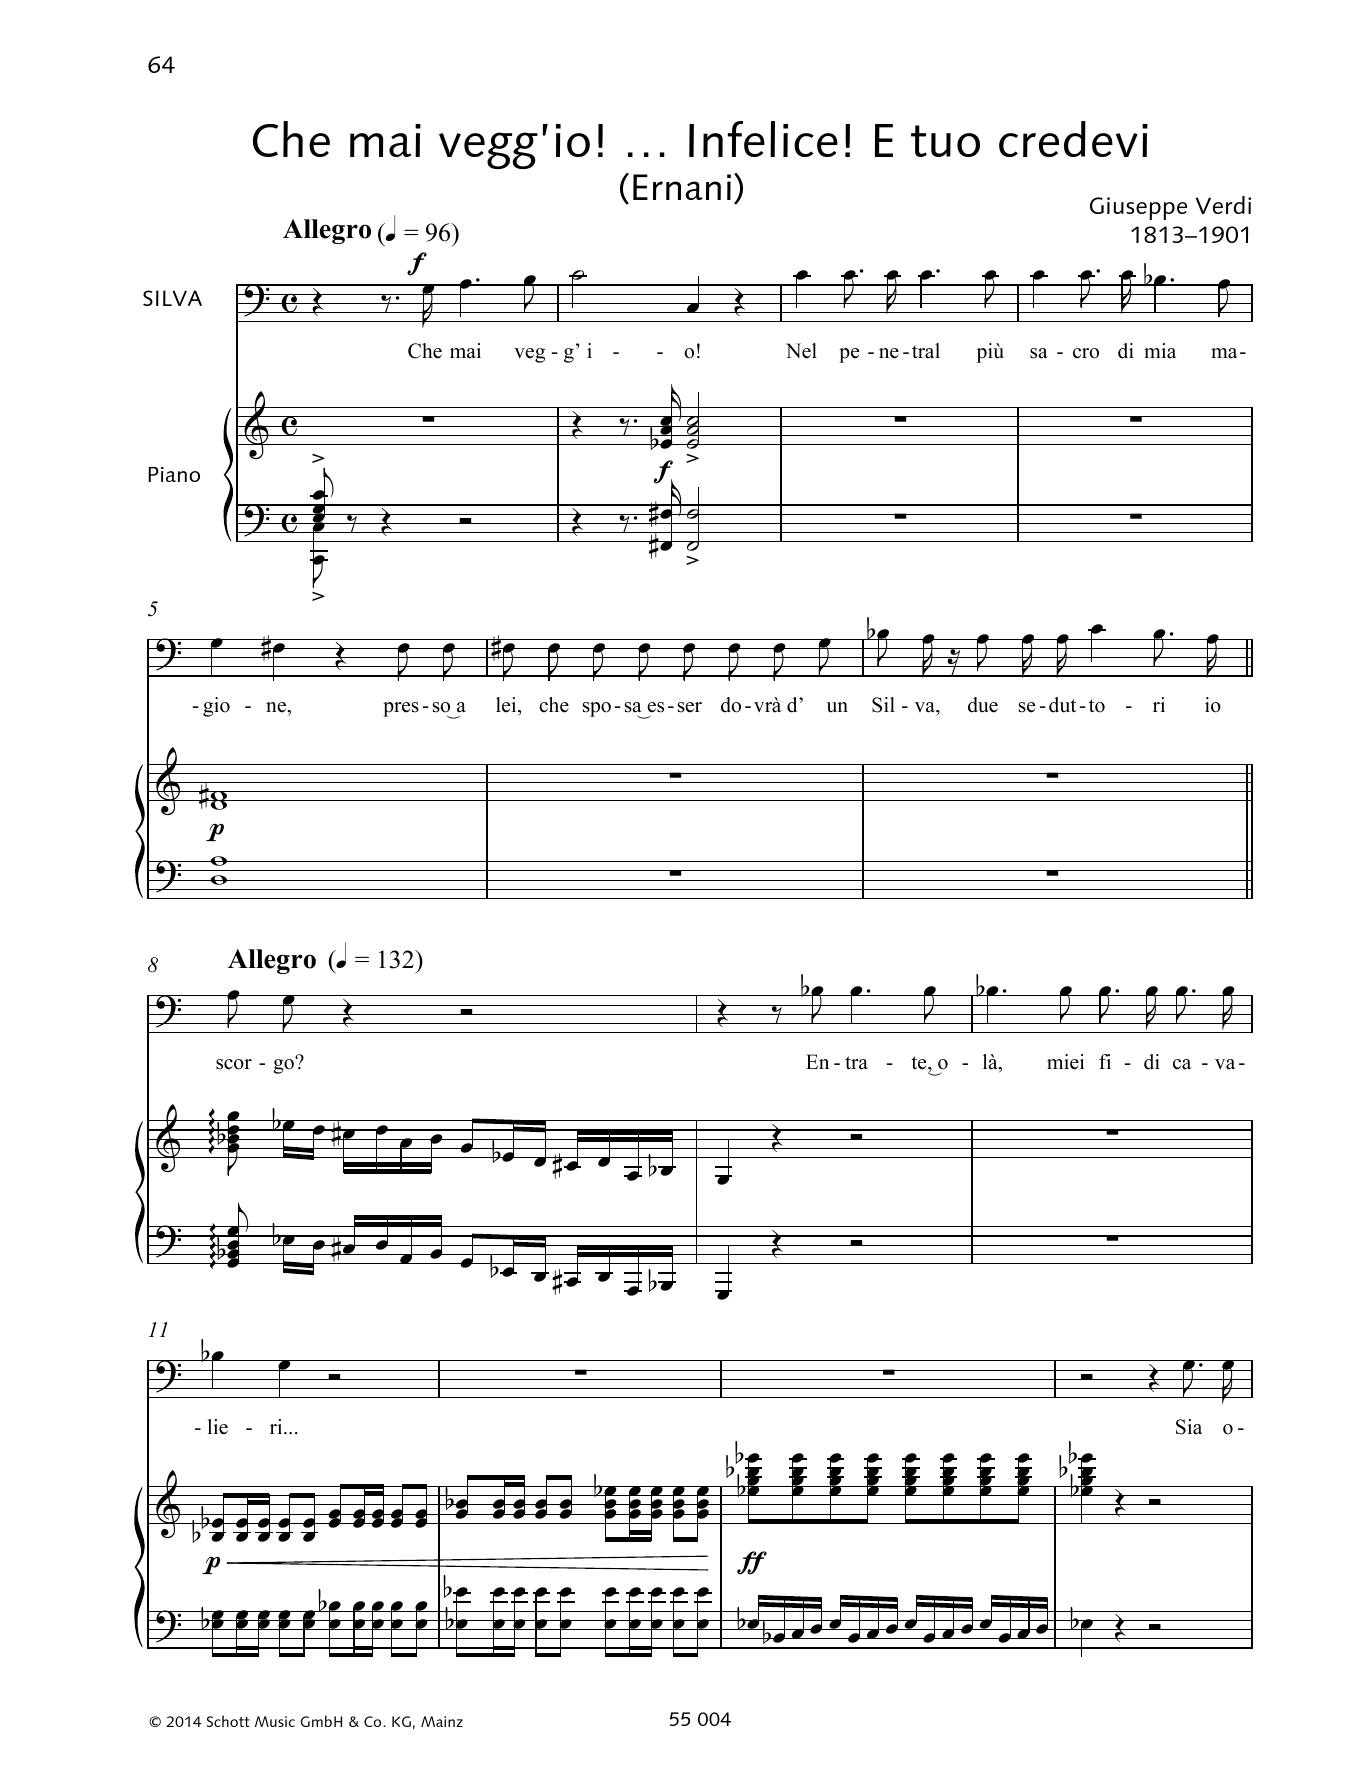 Giuseppe Verdi Che mai vegg'io!... Infelice! E tuo credevi Sheet Music Notes & Chords for Piano & Vocal - Download or Print PDF